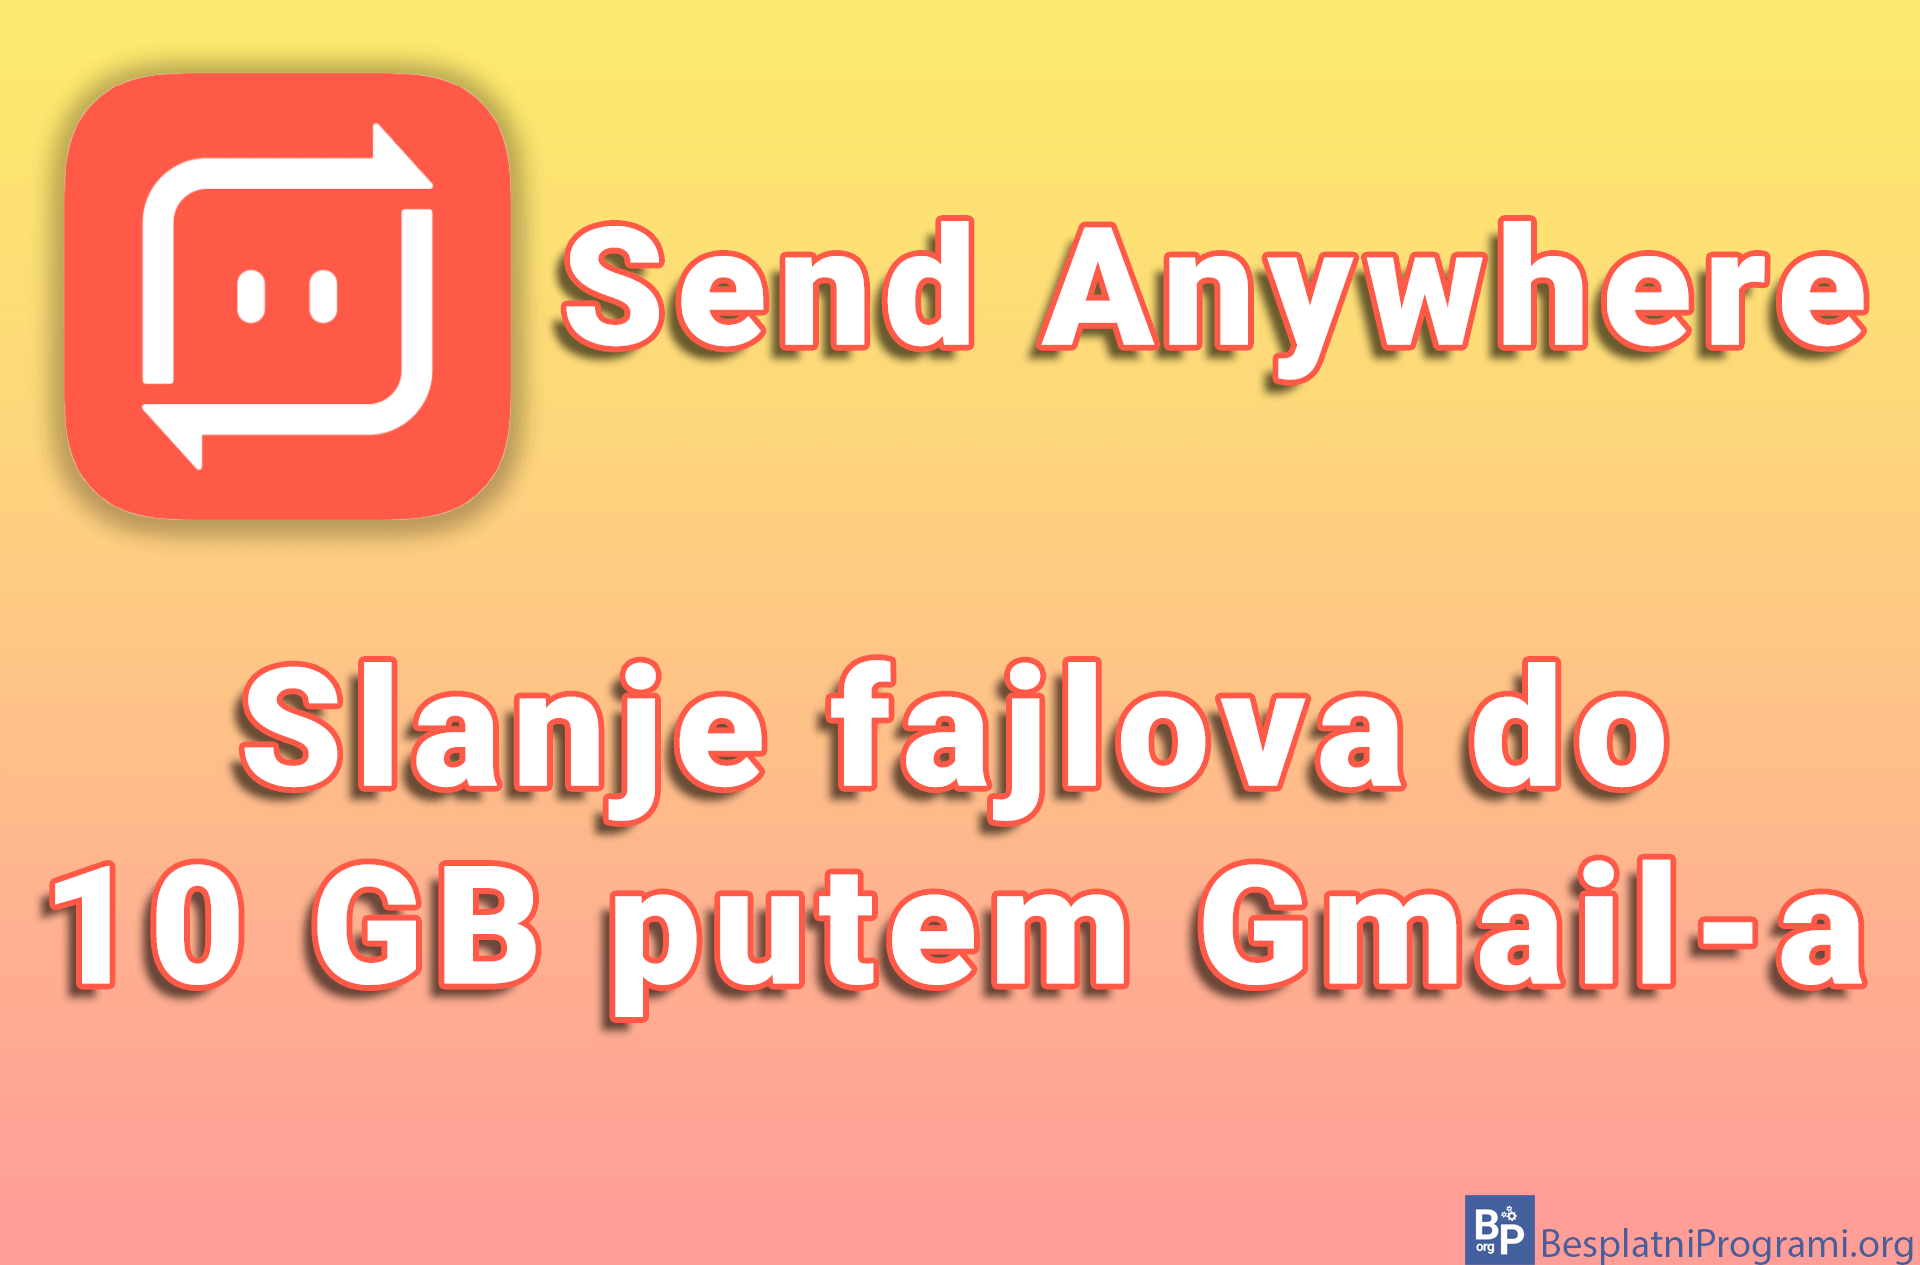 Send Anywhere – slanje fajlova do 10 GB putem Gmail-a